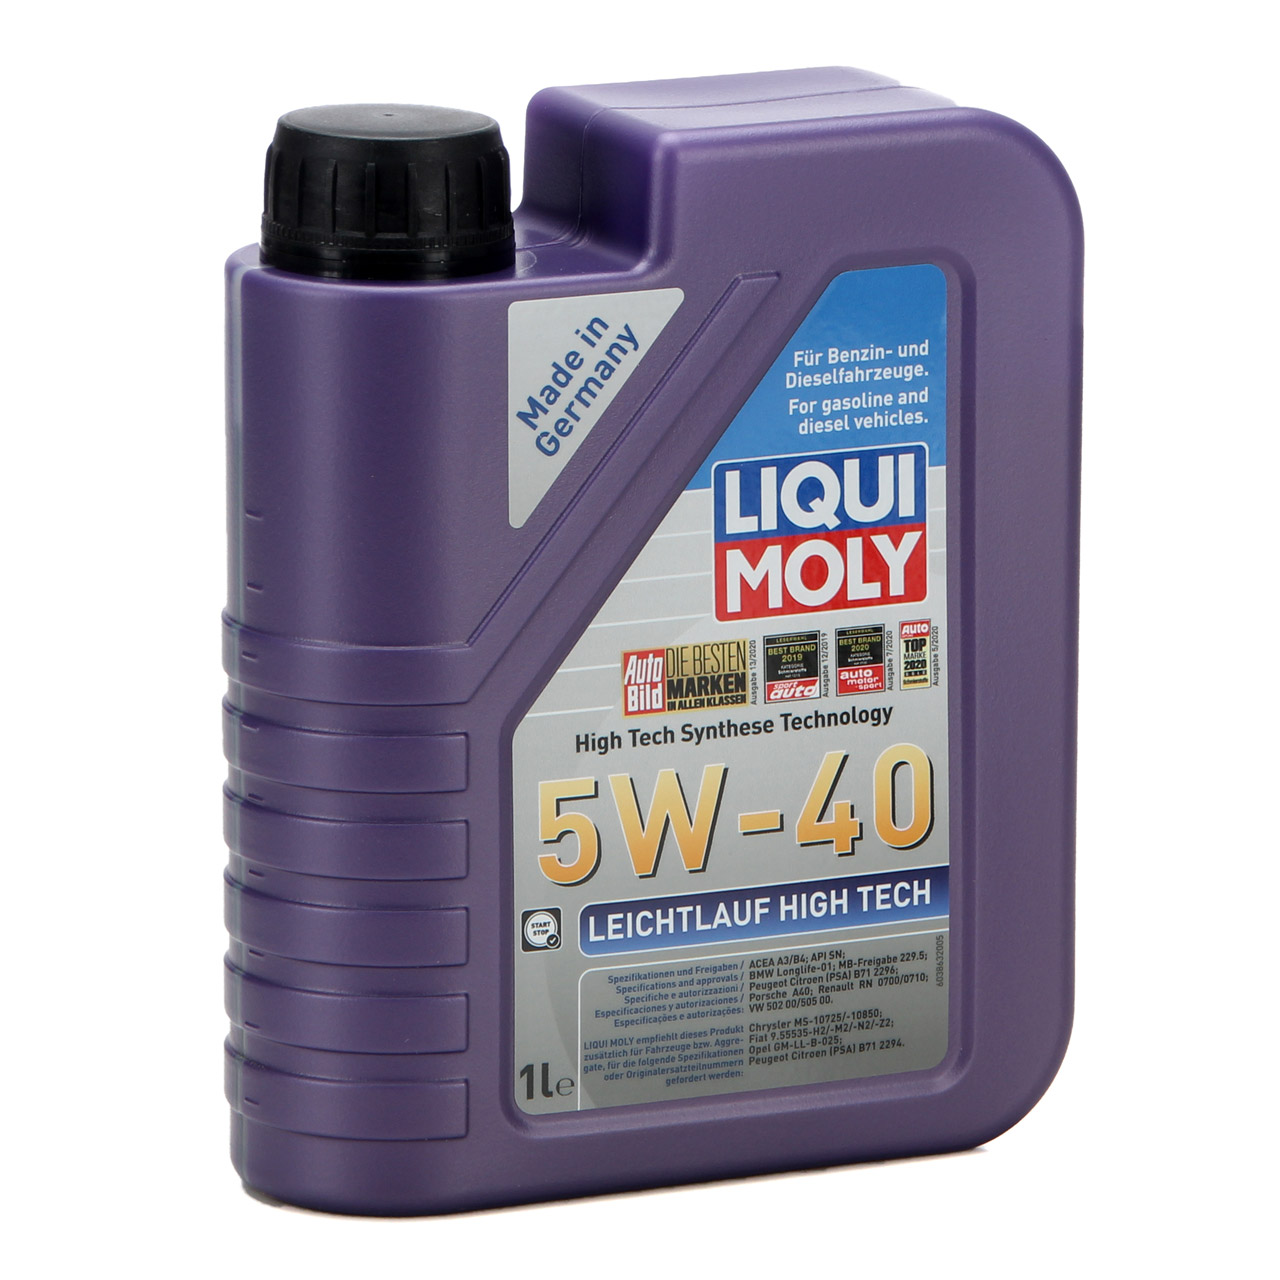 Масло ликви моли 5 литров. Liqui Moly Leichtlauf hc7 5w-30 характеристики.